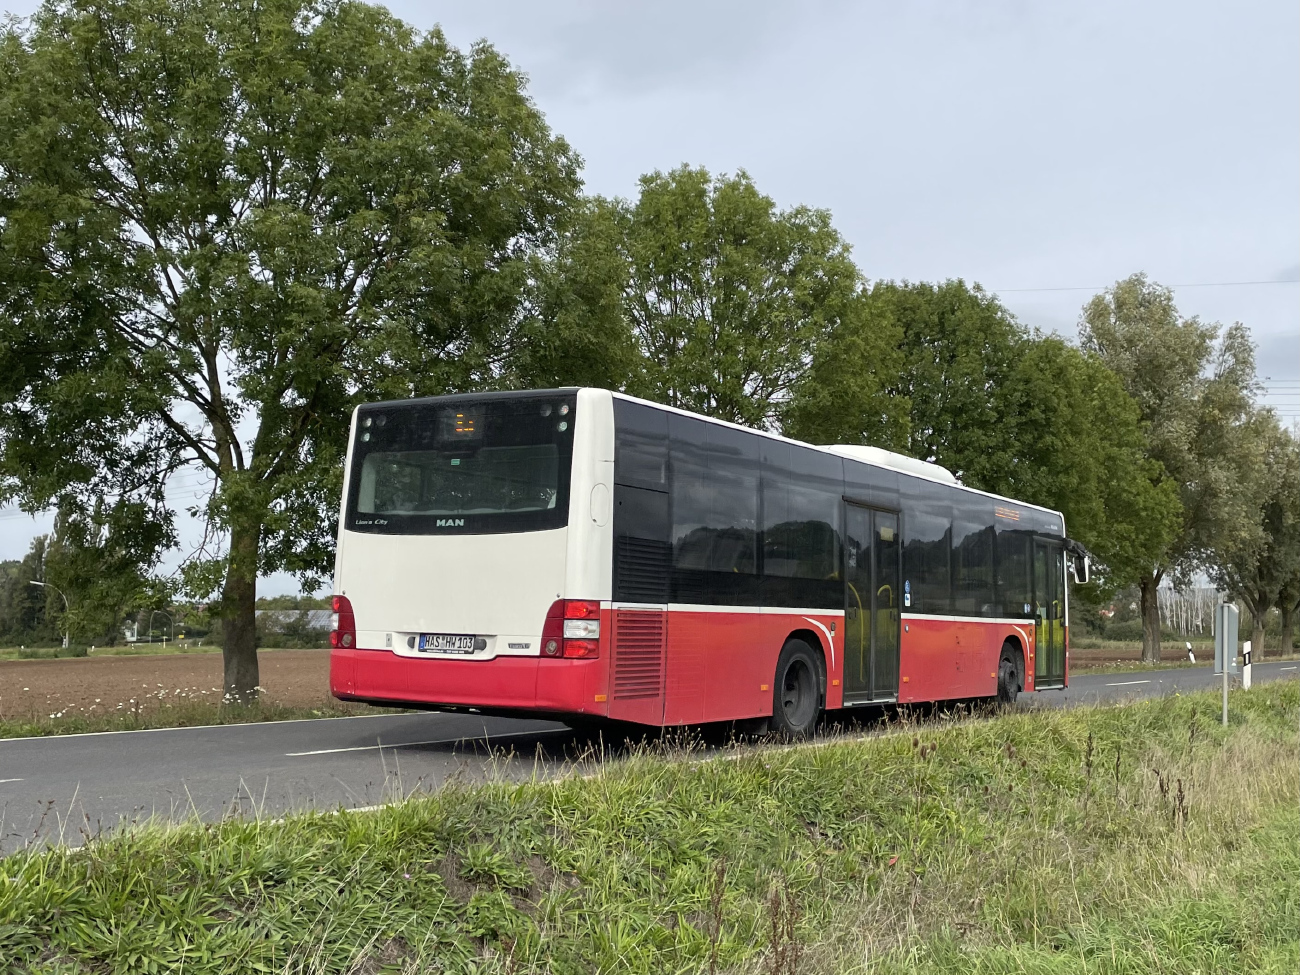 Haßfurt, MAN A21 Lion's City NL323 # HAS-HW 103; Haßfurt — Linienbündel 3 — Will Reisen